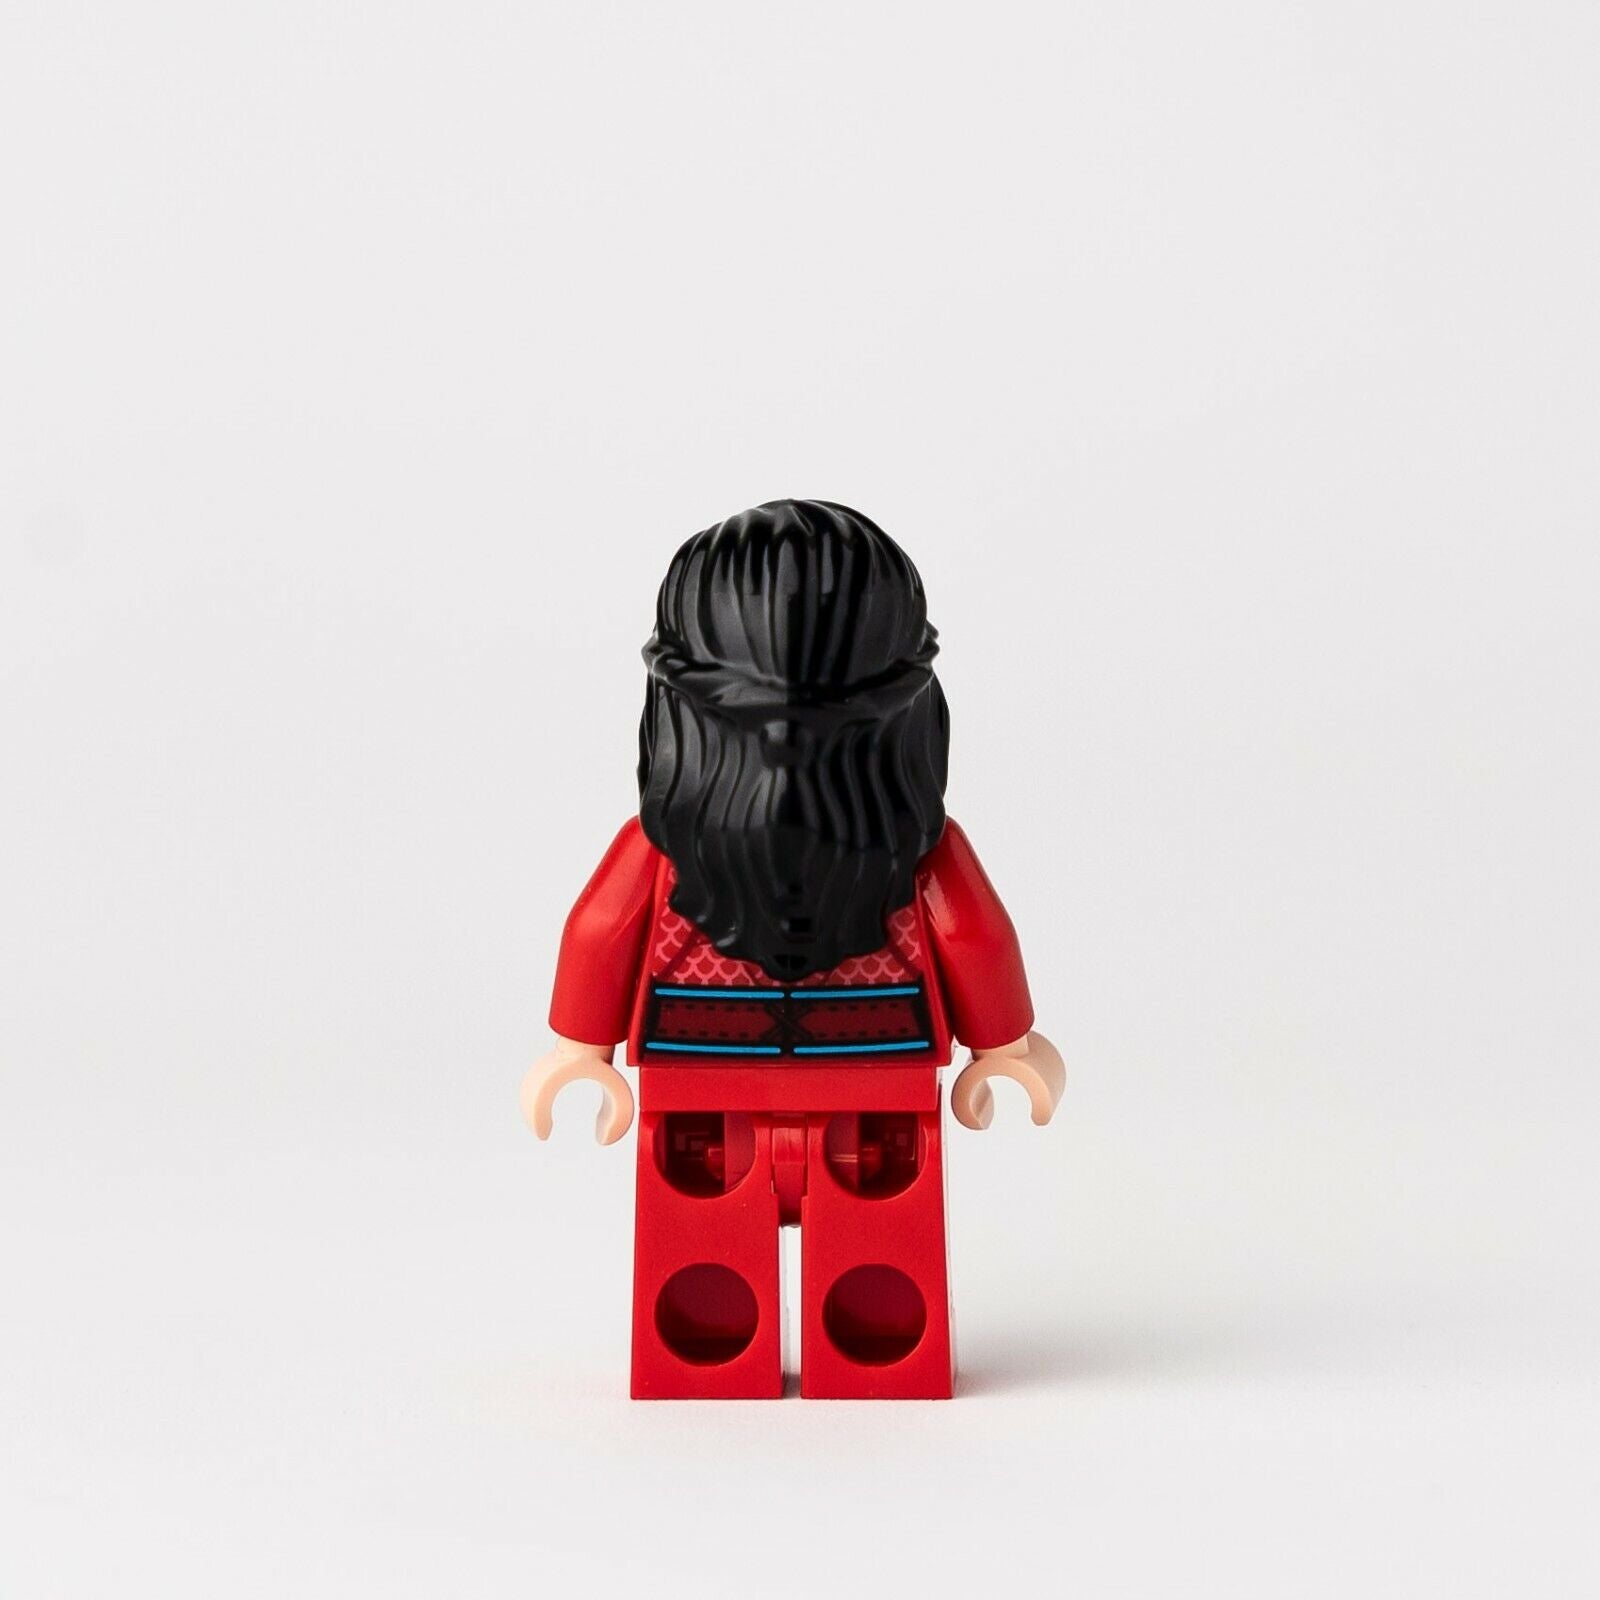 New LEGO Katy Minifigure - Marvel Shang-Chi - 76176 (sh699)